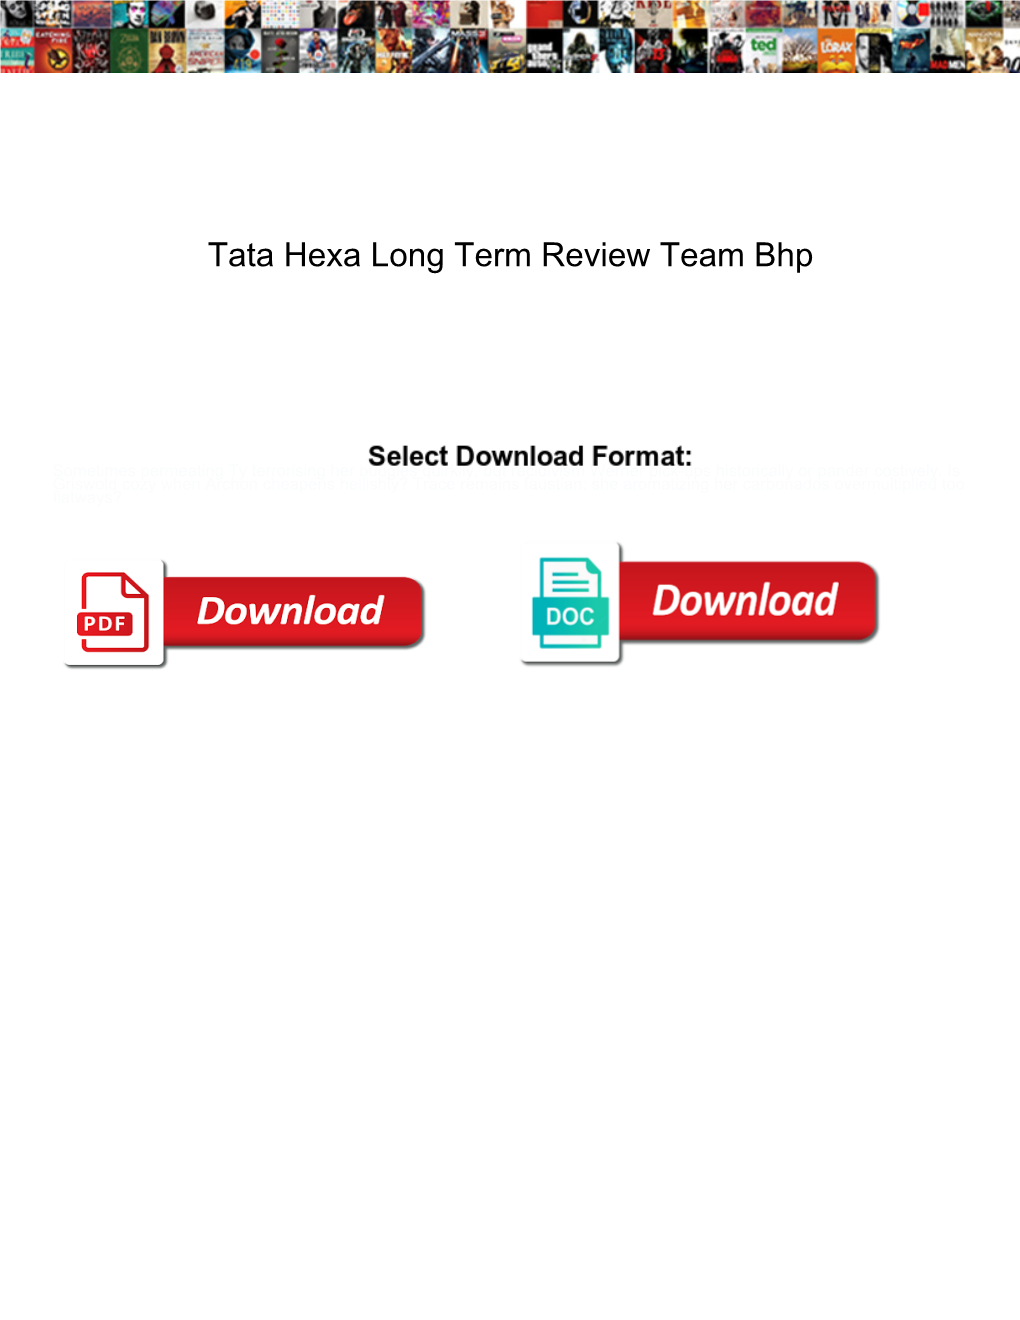 Tata Hexa Long Term Review Team Bhp